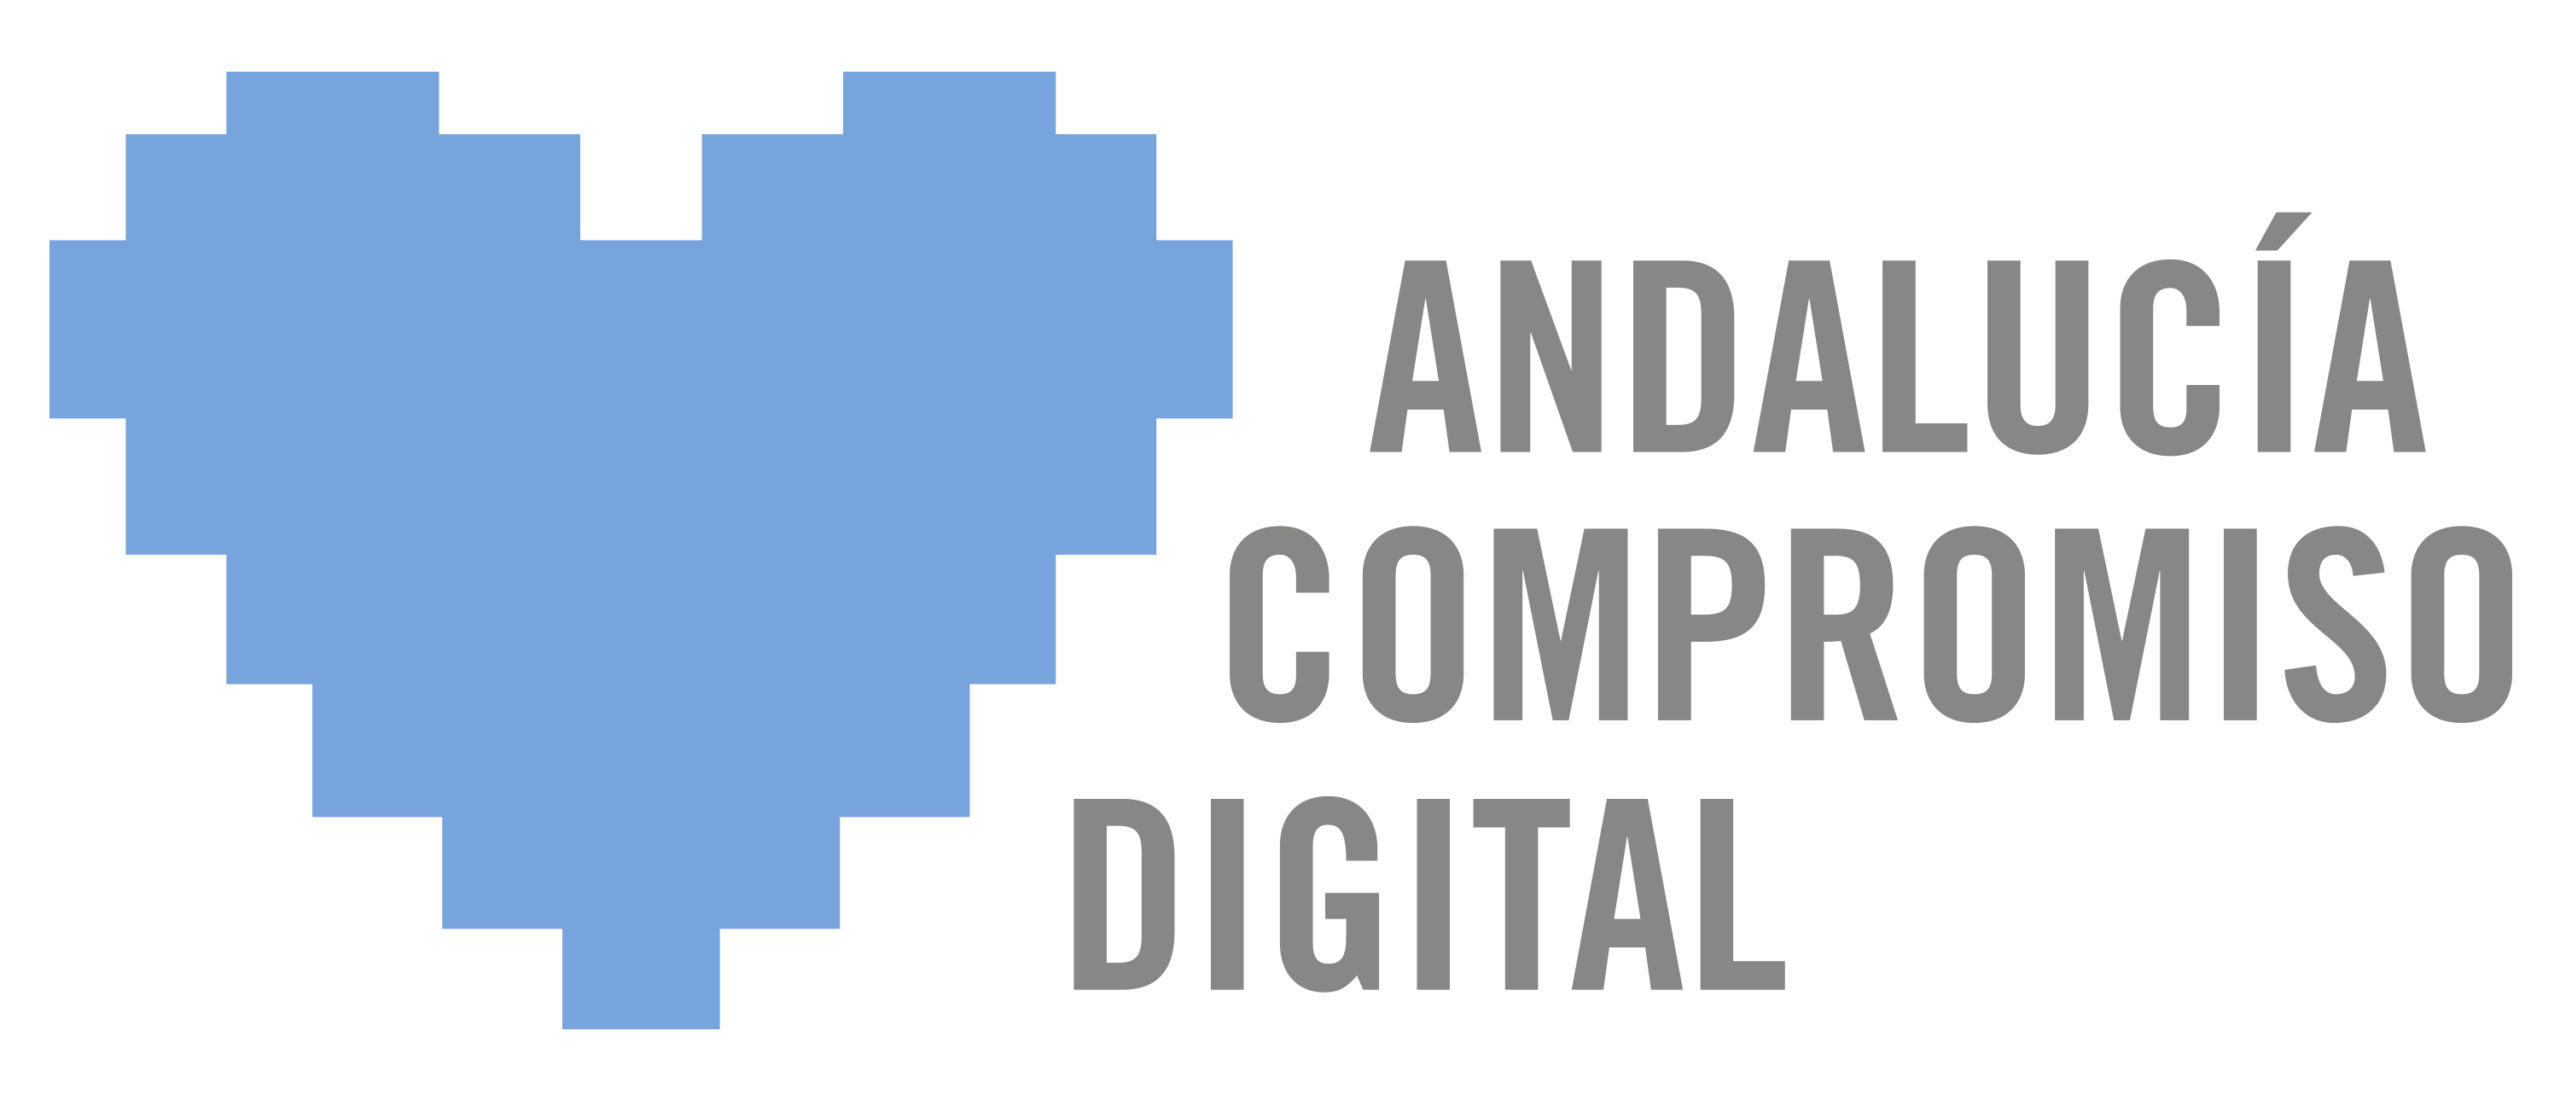 Oferta formativa Andalucía Compromiso Digital